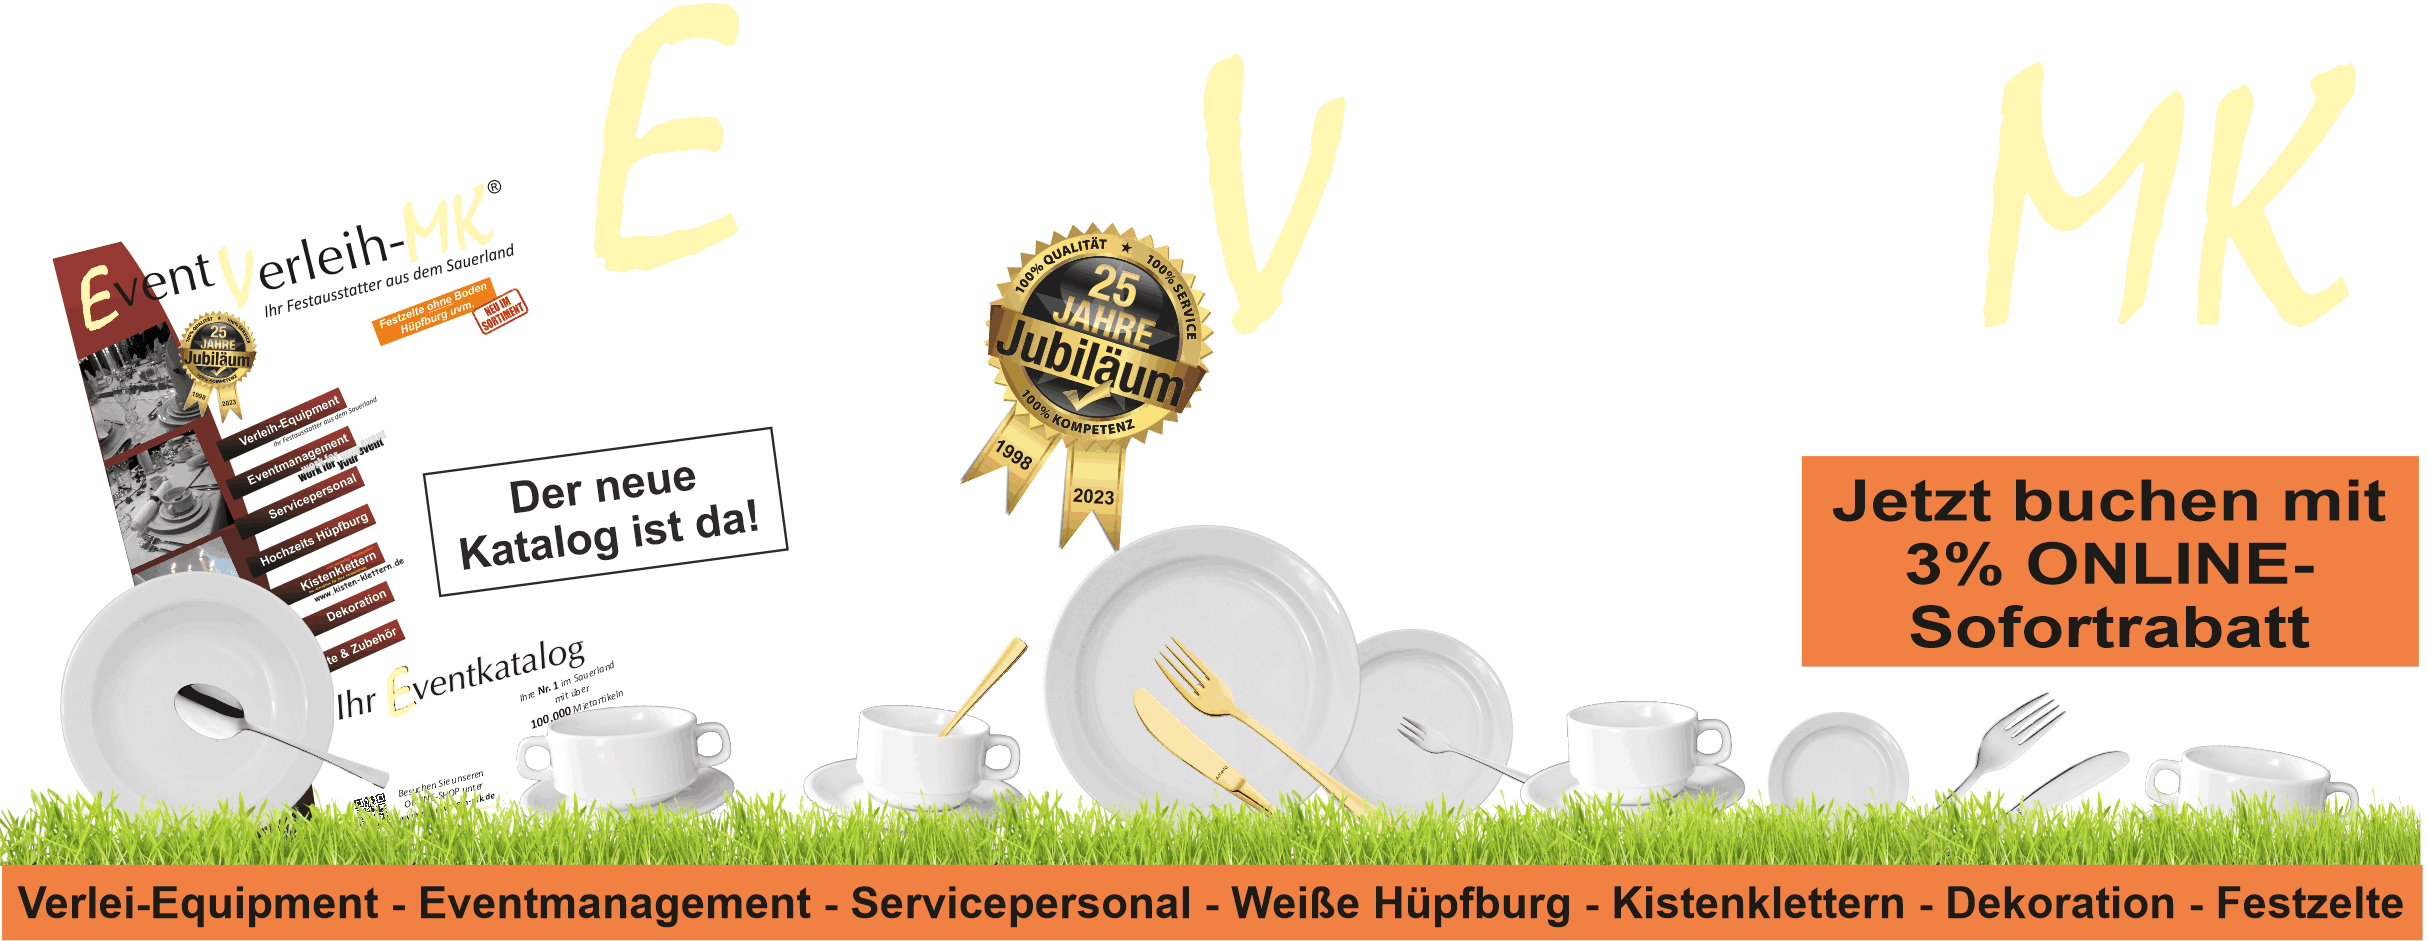 EventVerleih-Mk.de-Logo